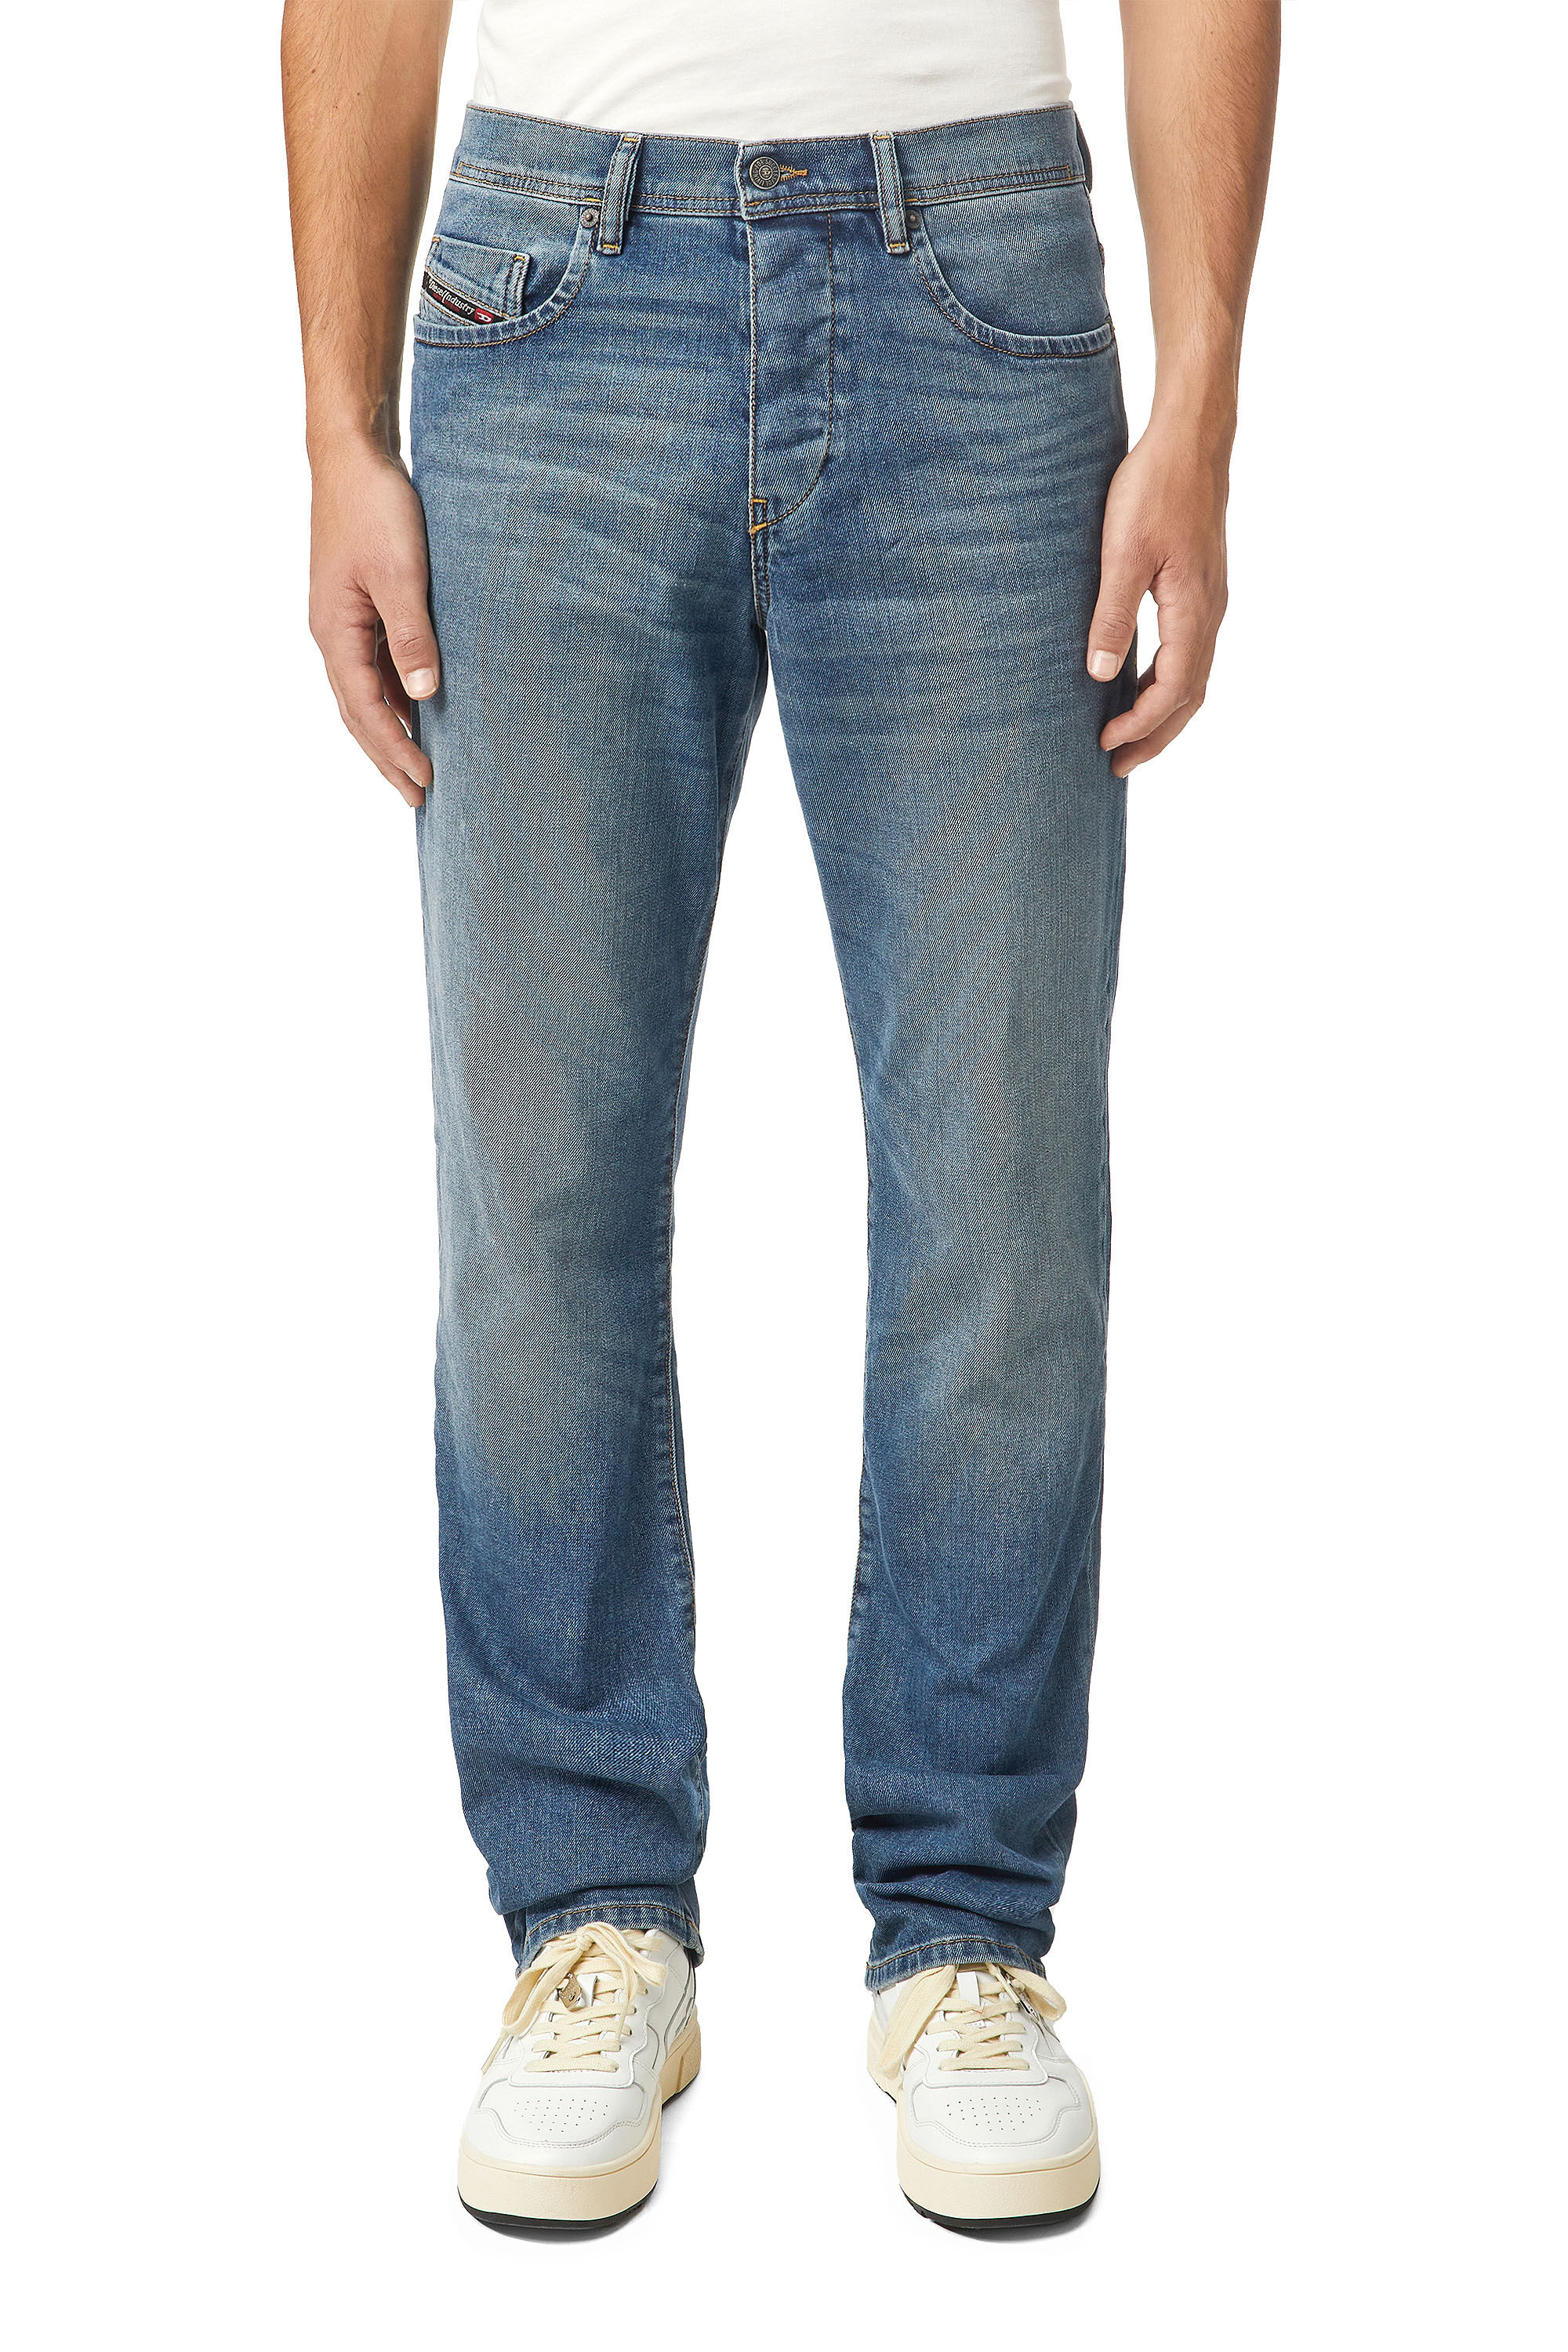 D-VOCS Man: Bootcut and Flare Medium blue Jeans